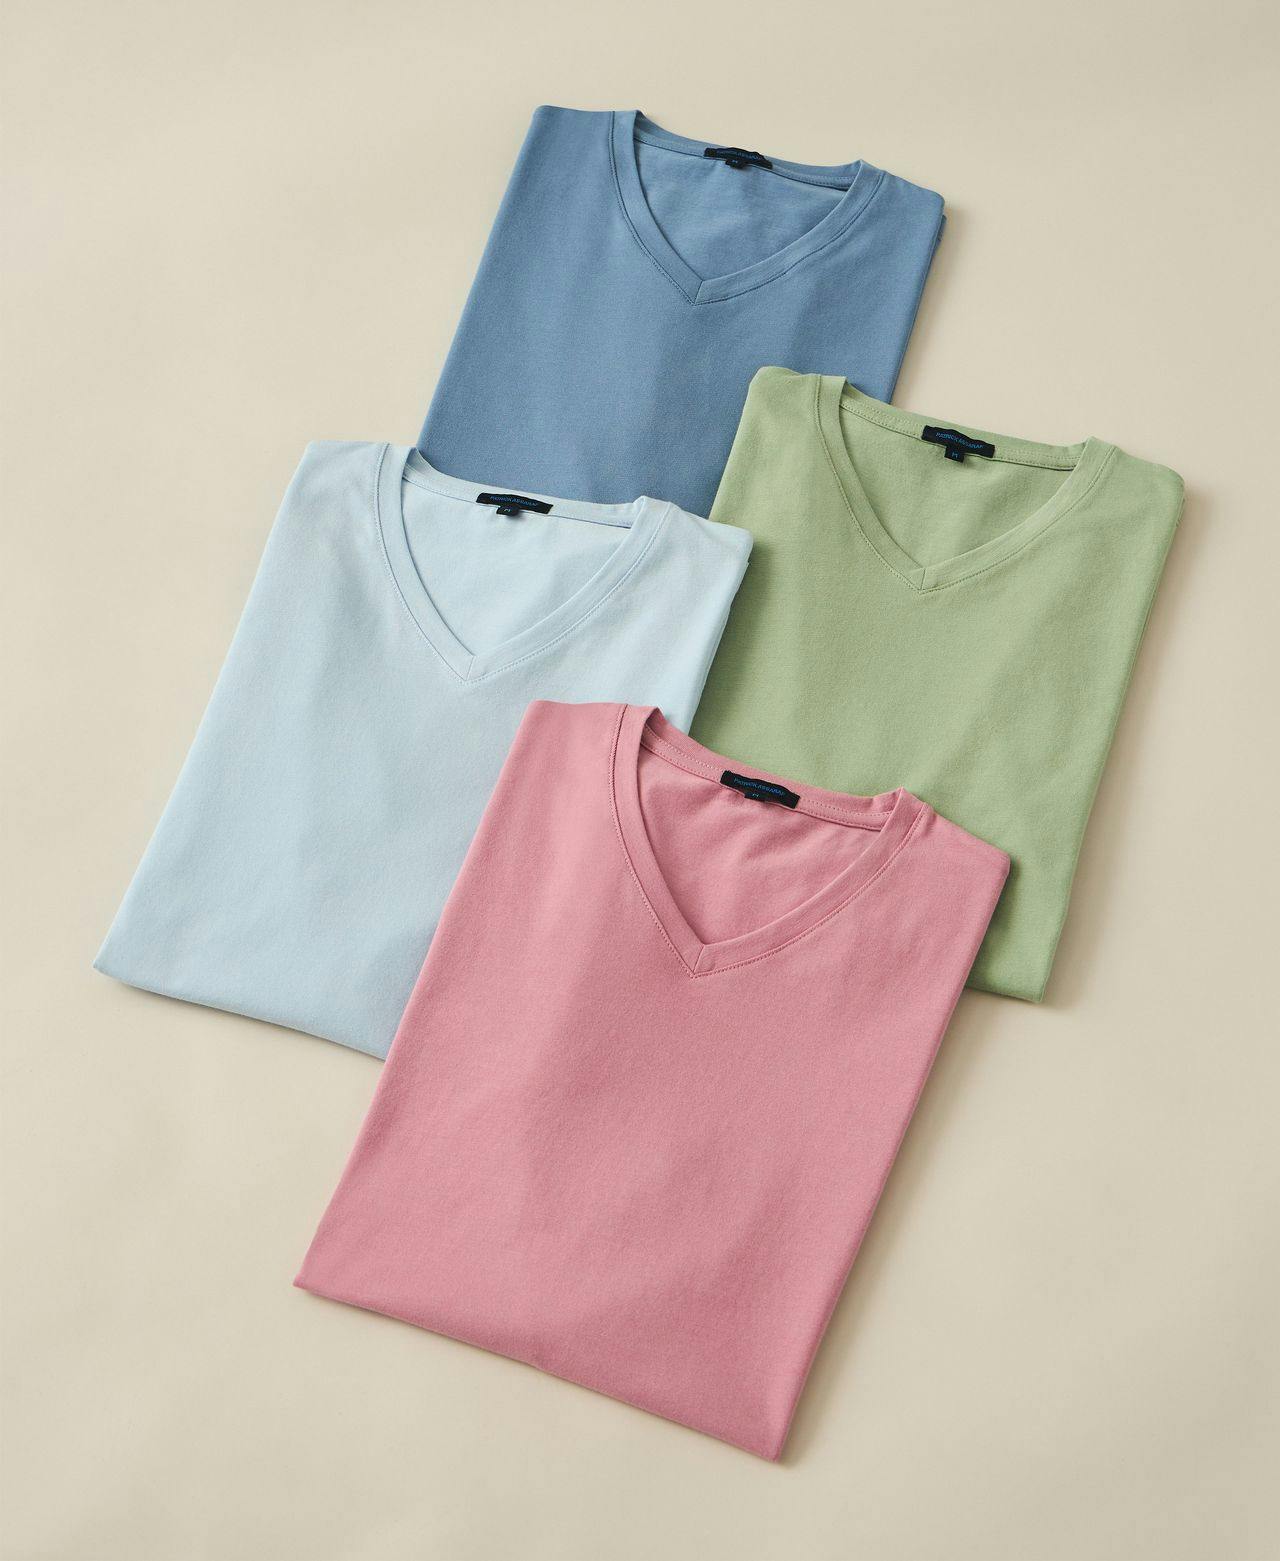 four t-shirts folded on beige backdrop